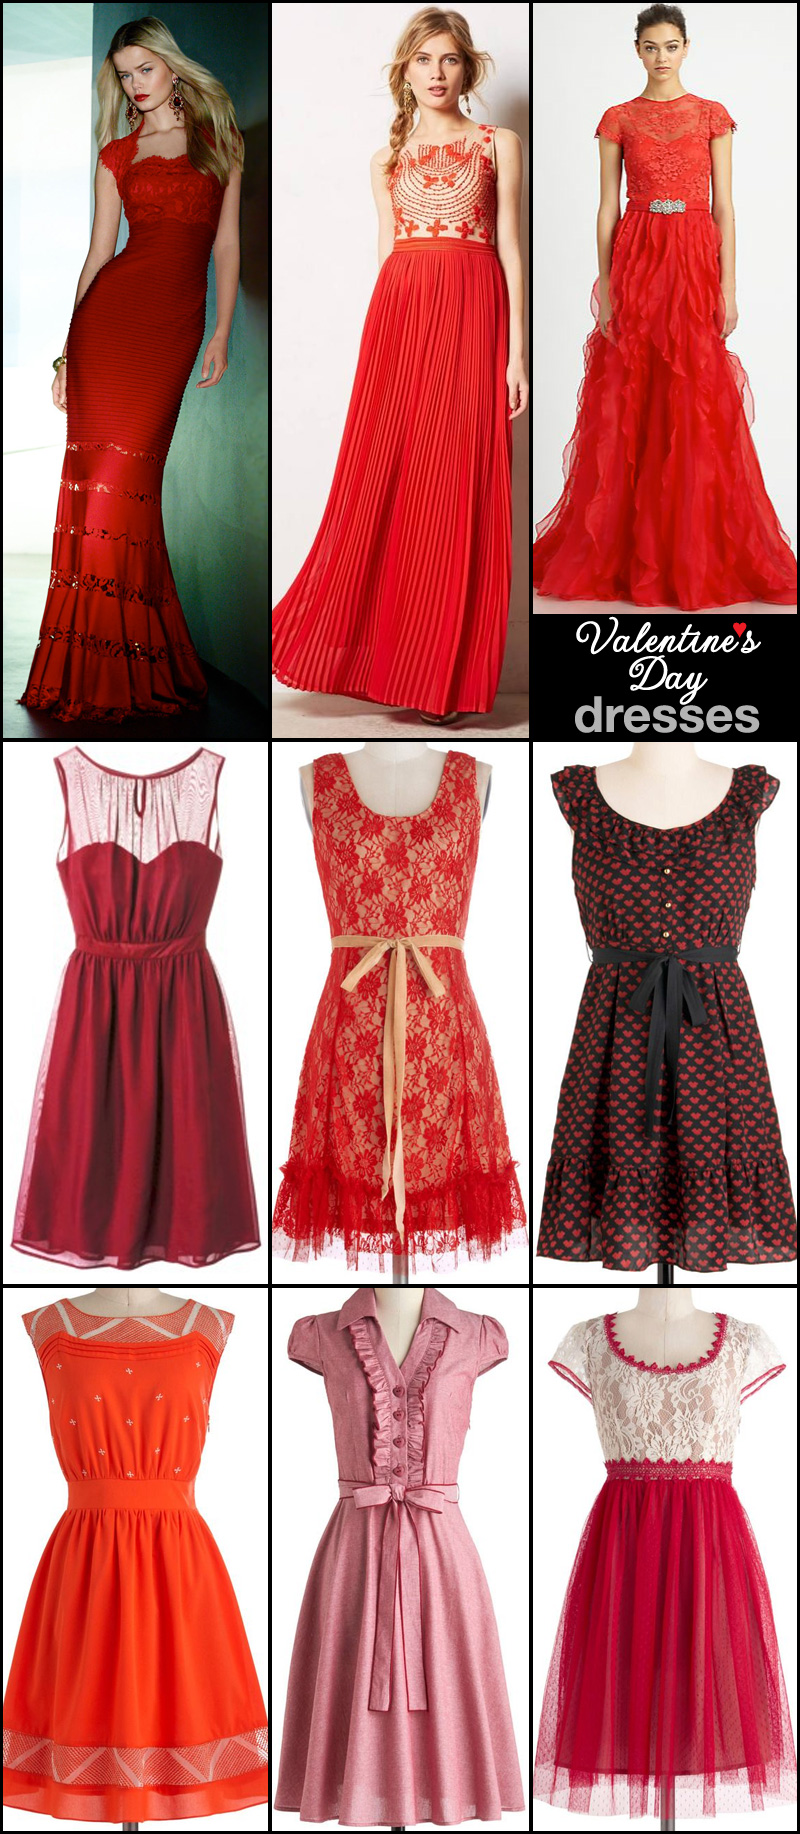 valentine’s dresses